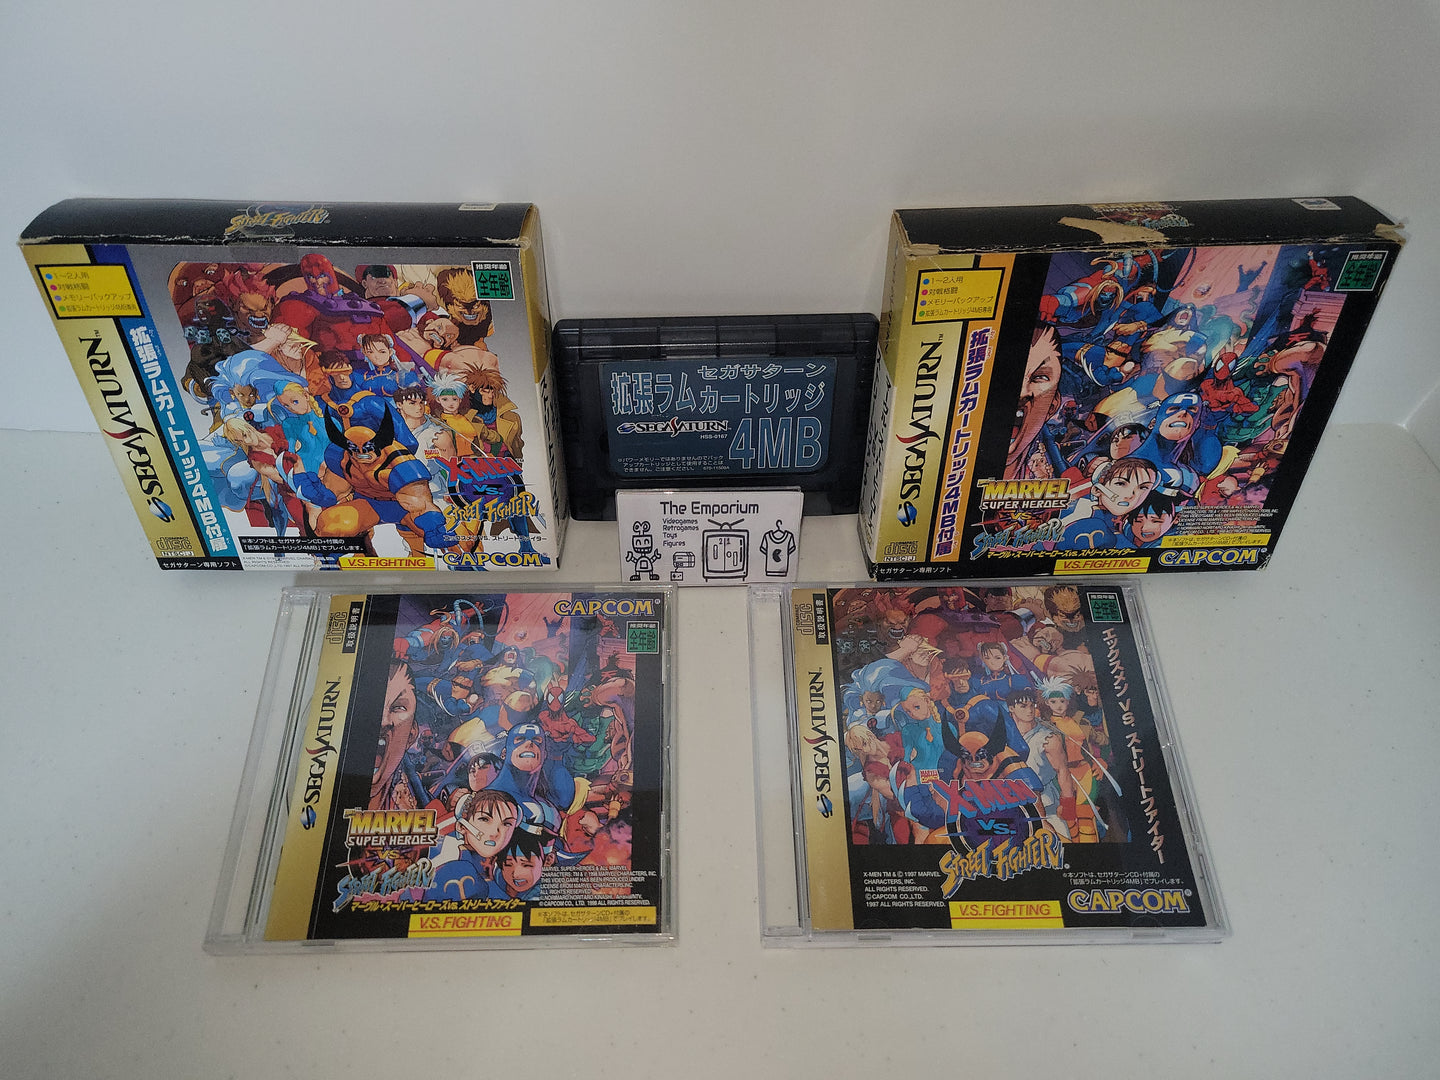 Xmen Vs Street Fighter + Marvel Super Heroes vs Street Fighter with RAM (RAM Pack Version) - Sega Saturn SegaSaturn